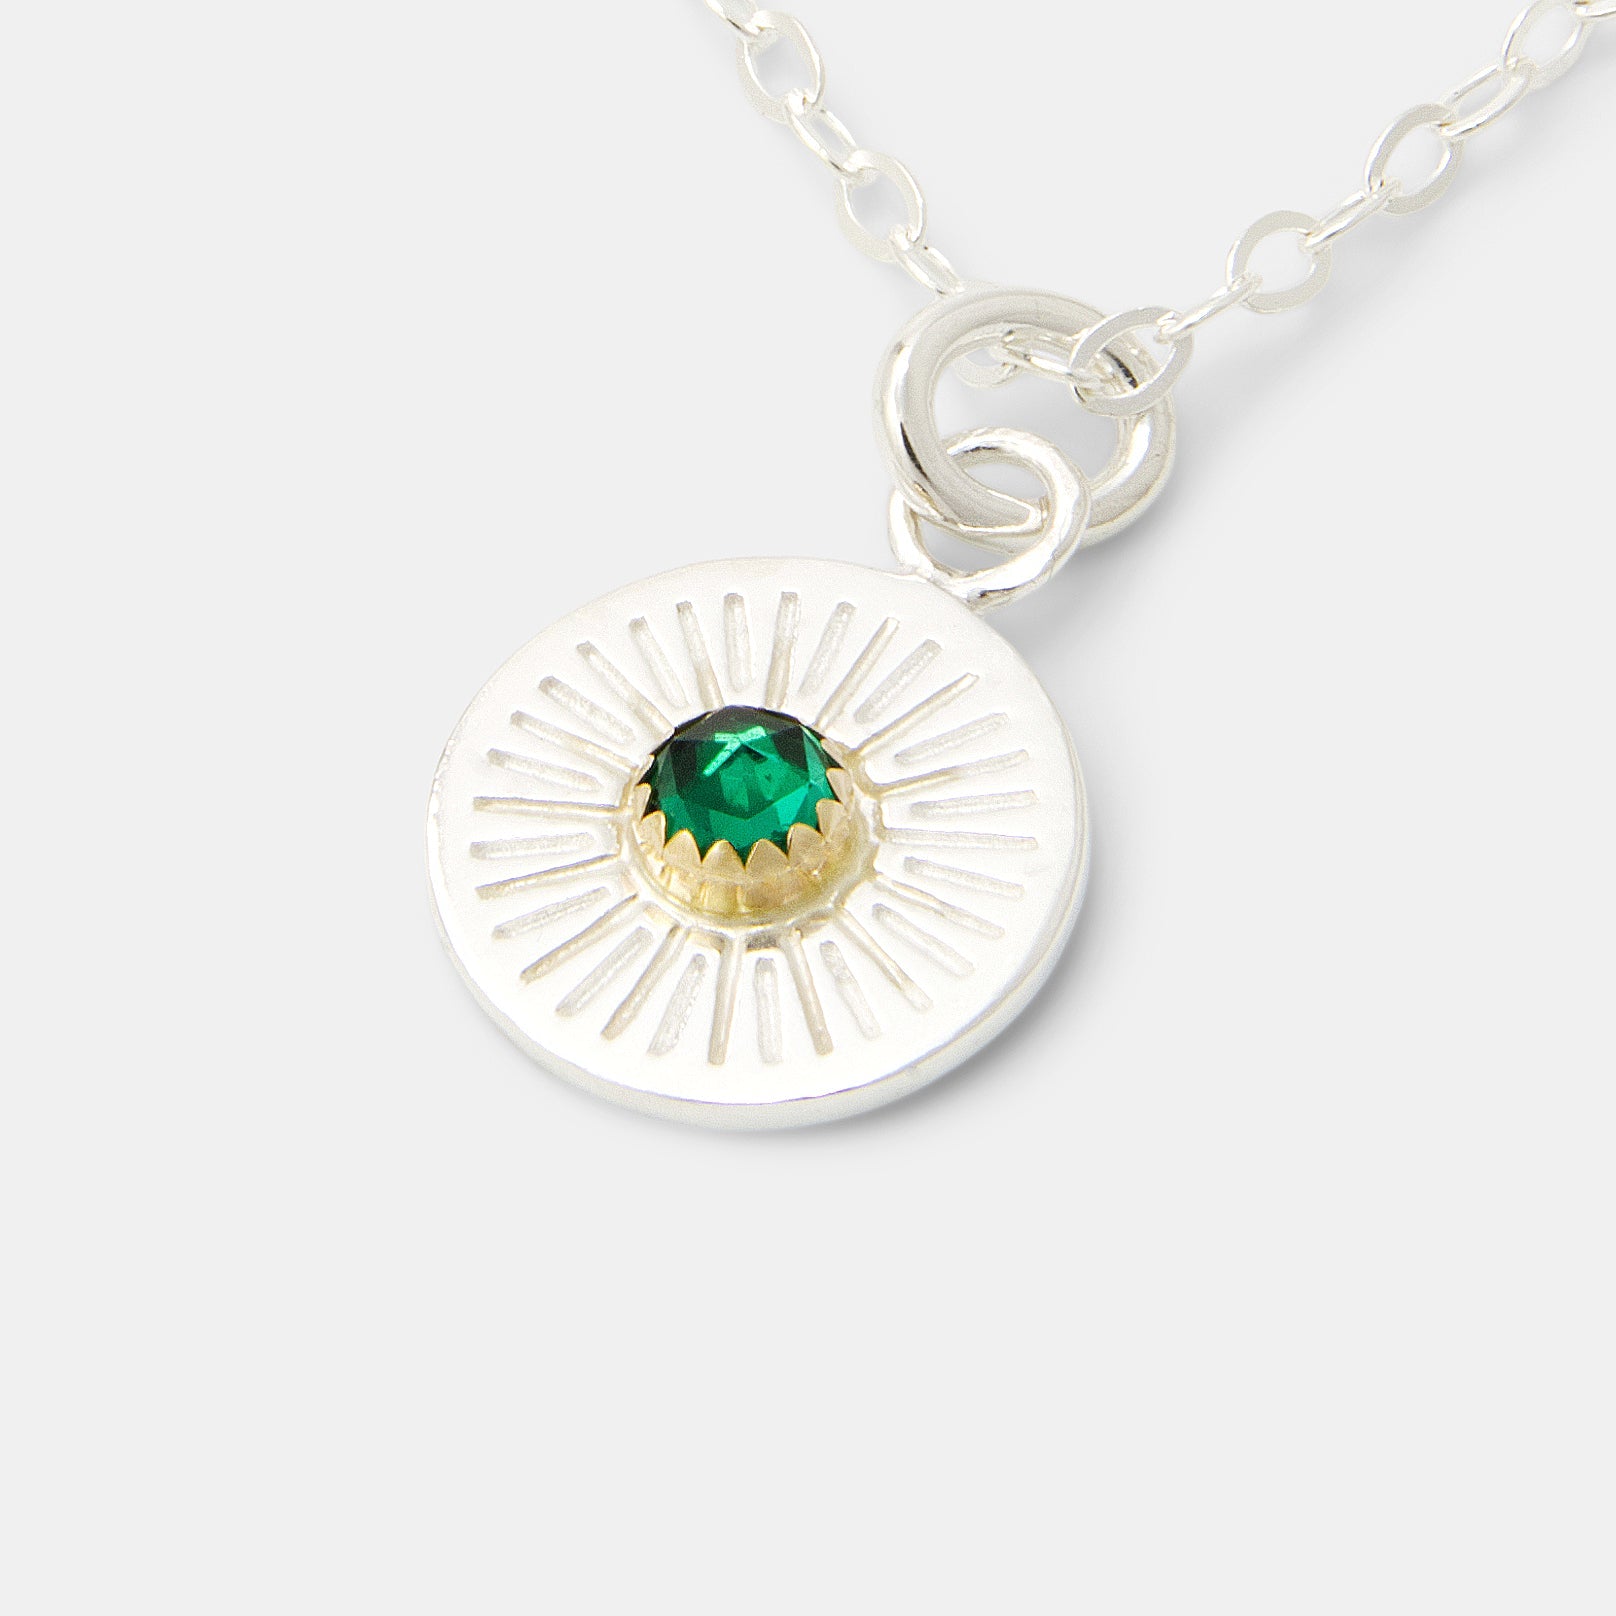 Birthstone silver pendant: emerald - Simone Walsh Jewellery Australia